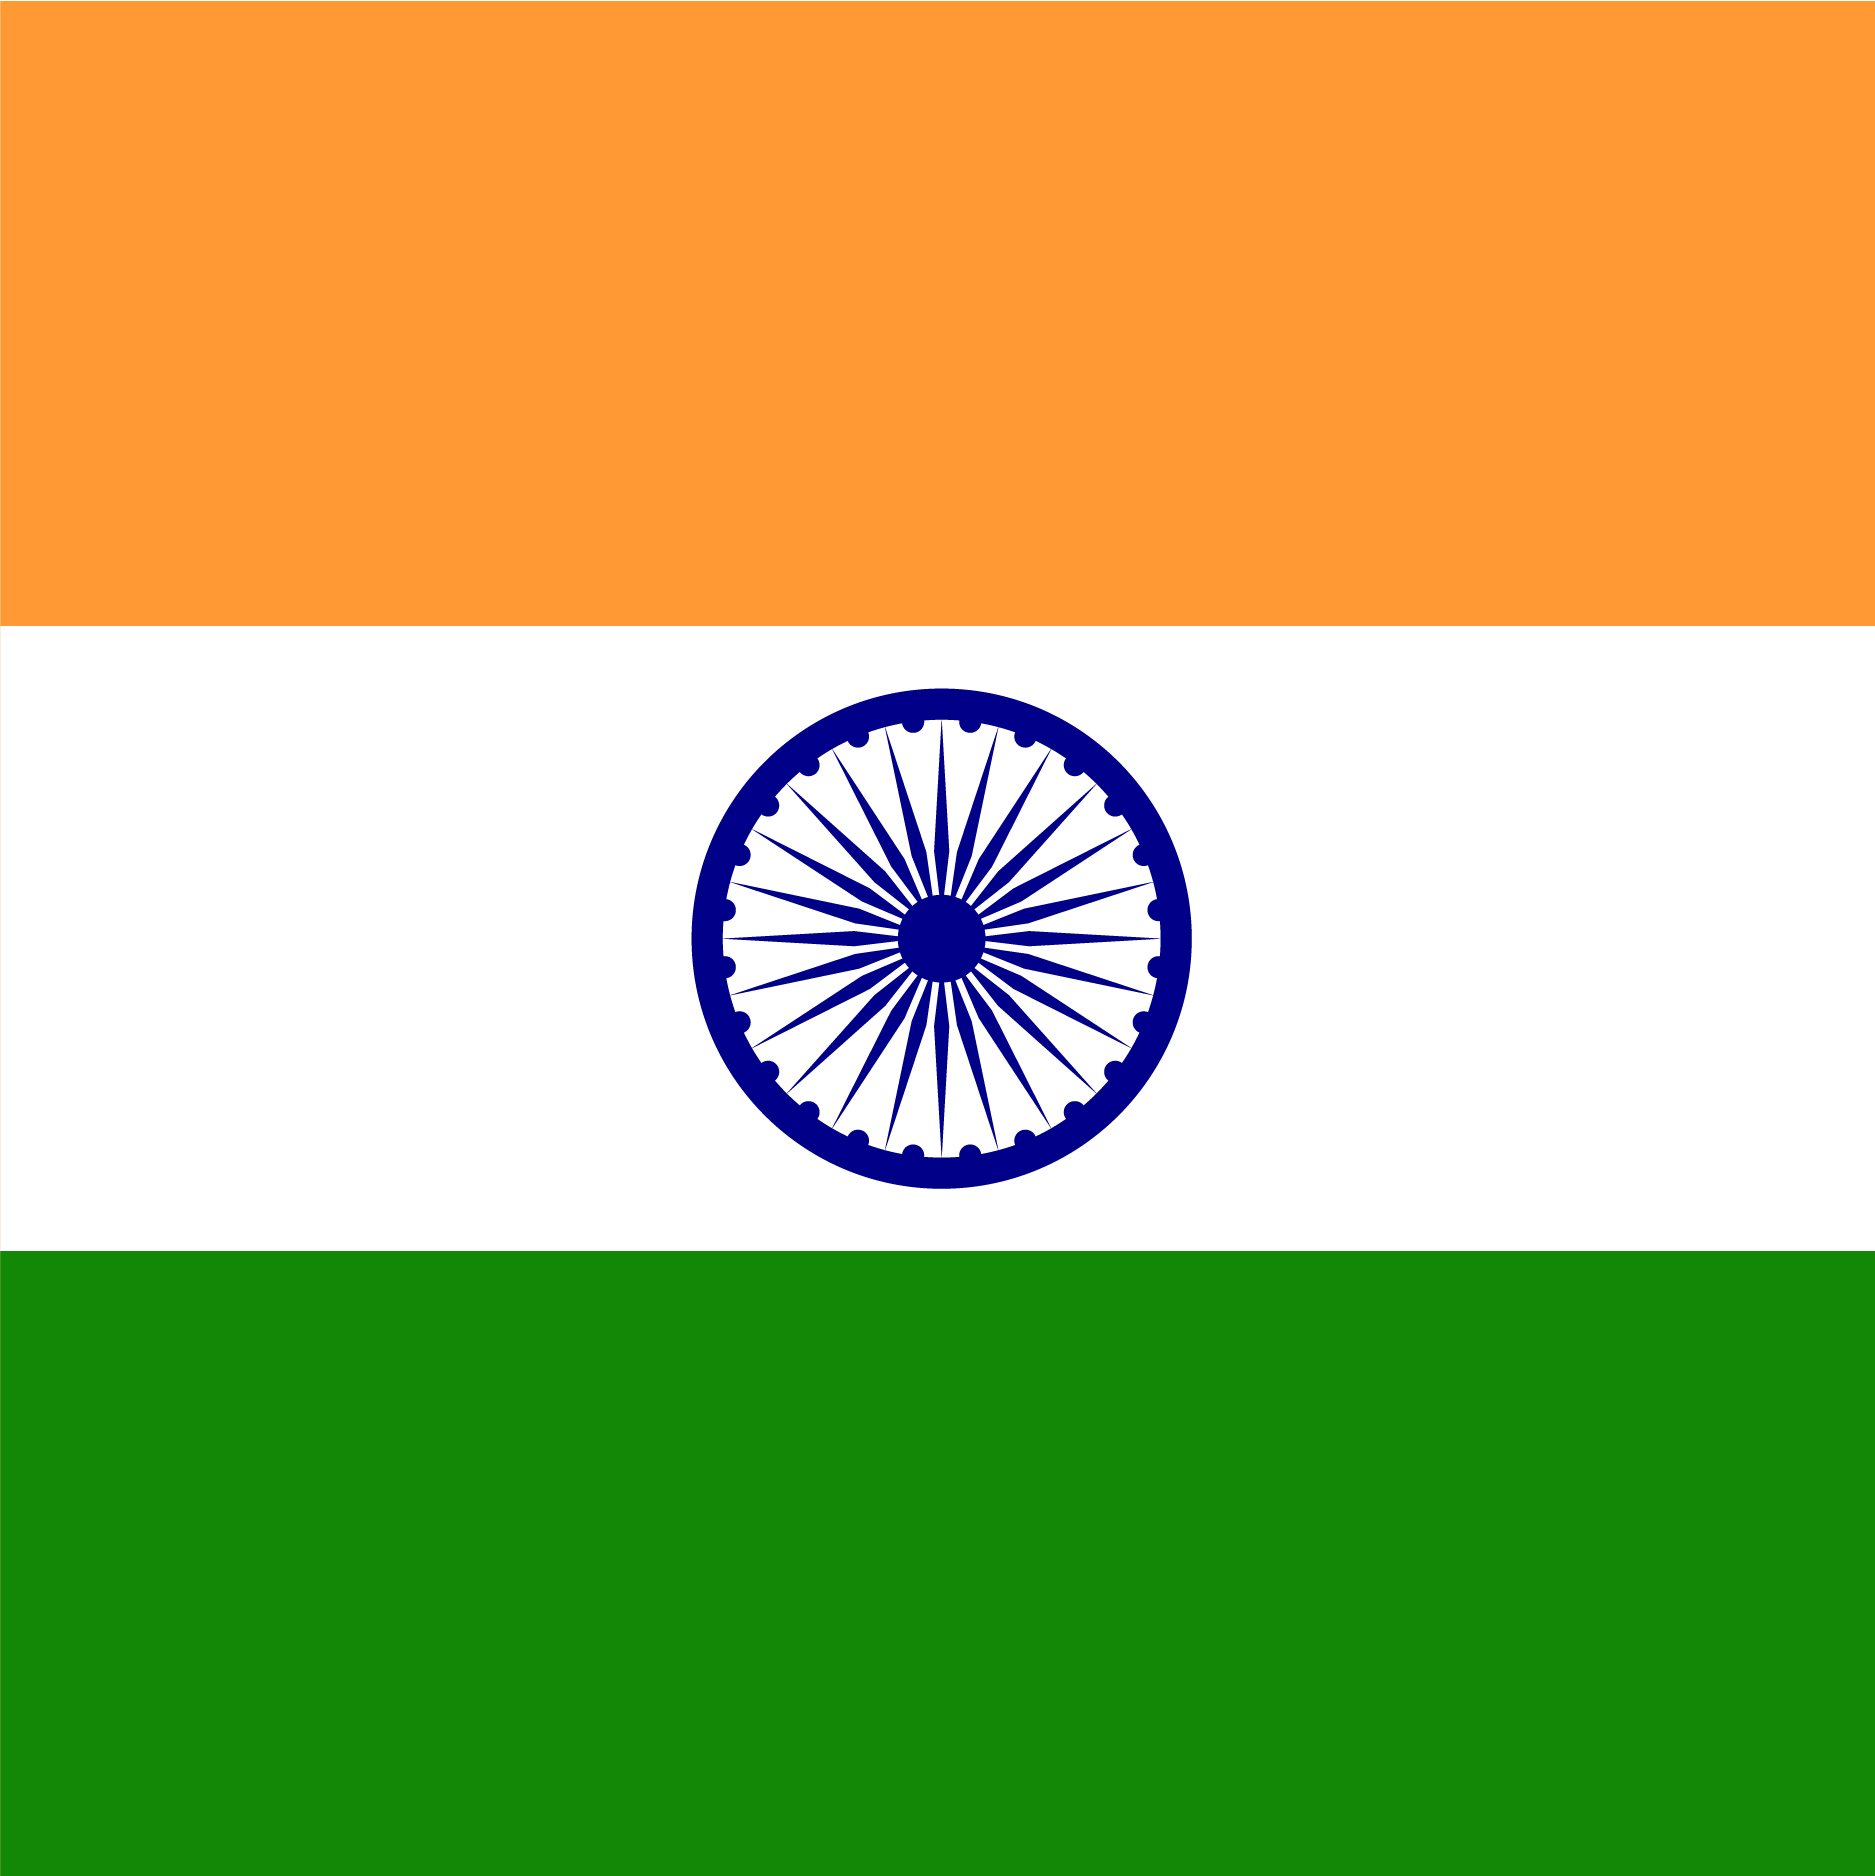 The India Flag 